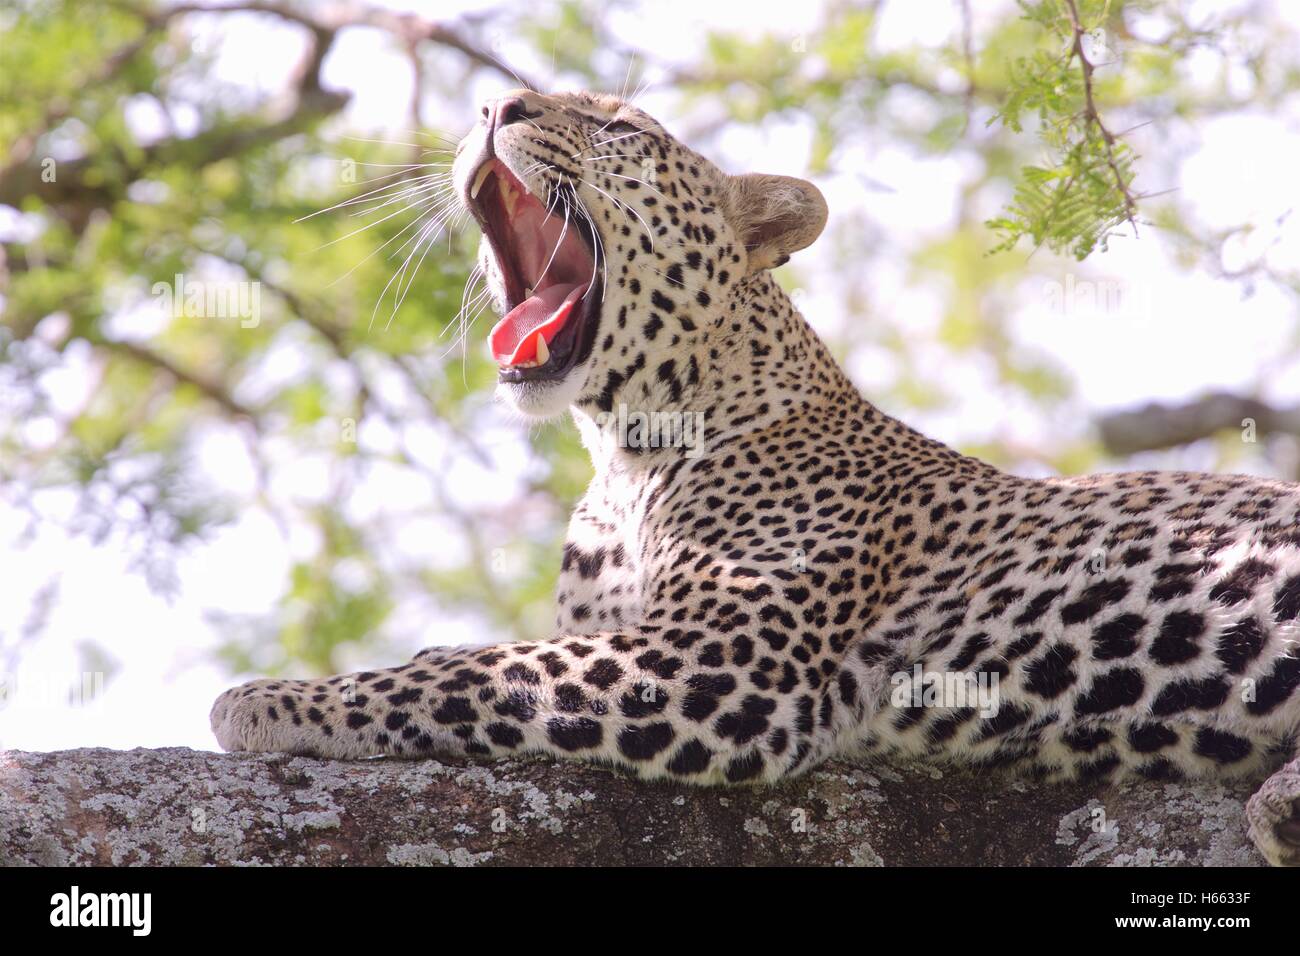 Viewing leopard on safari in Serengeti National Park, Tanzania. Stock Photo